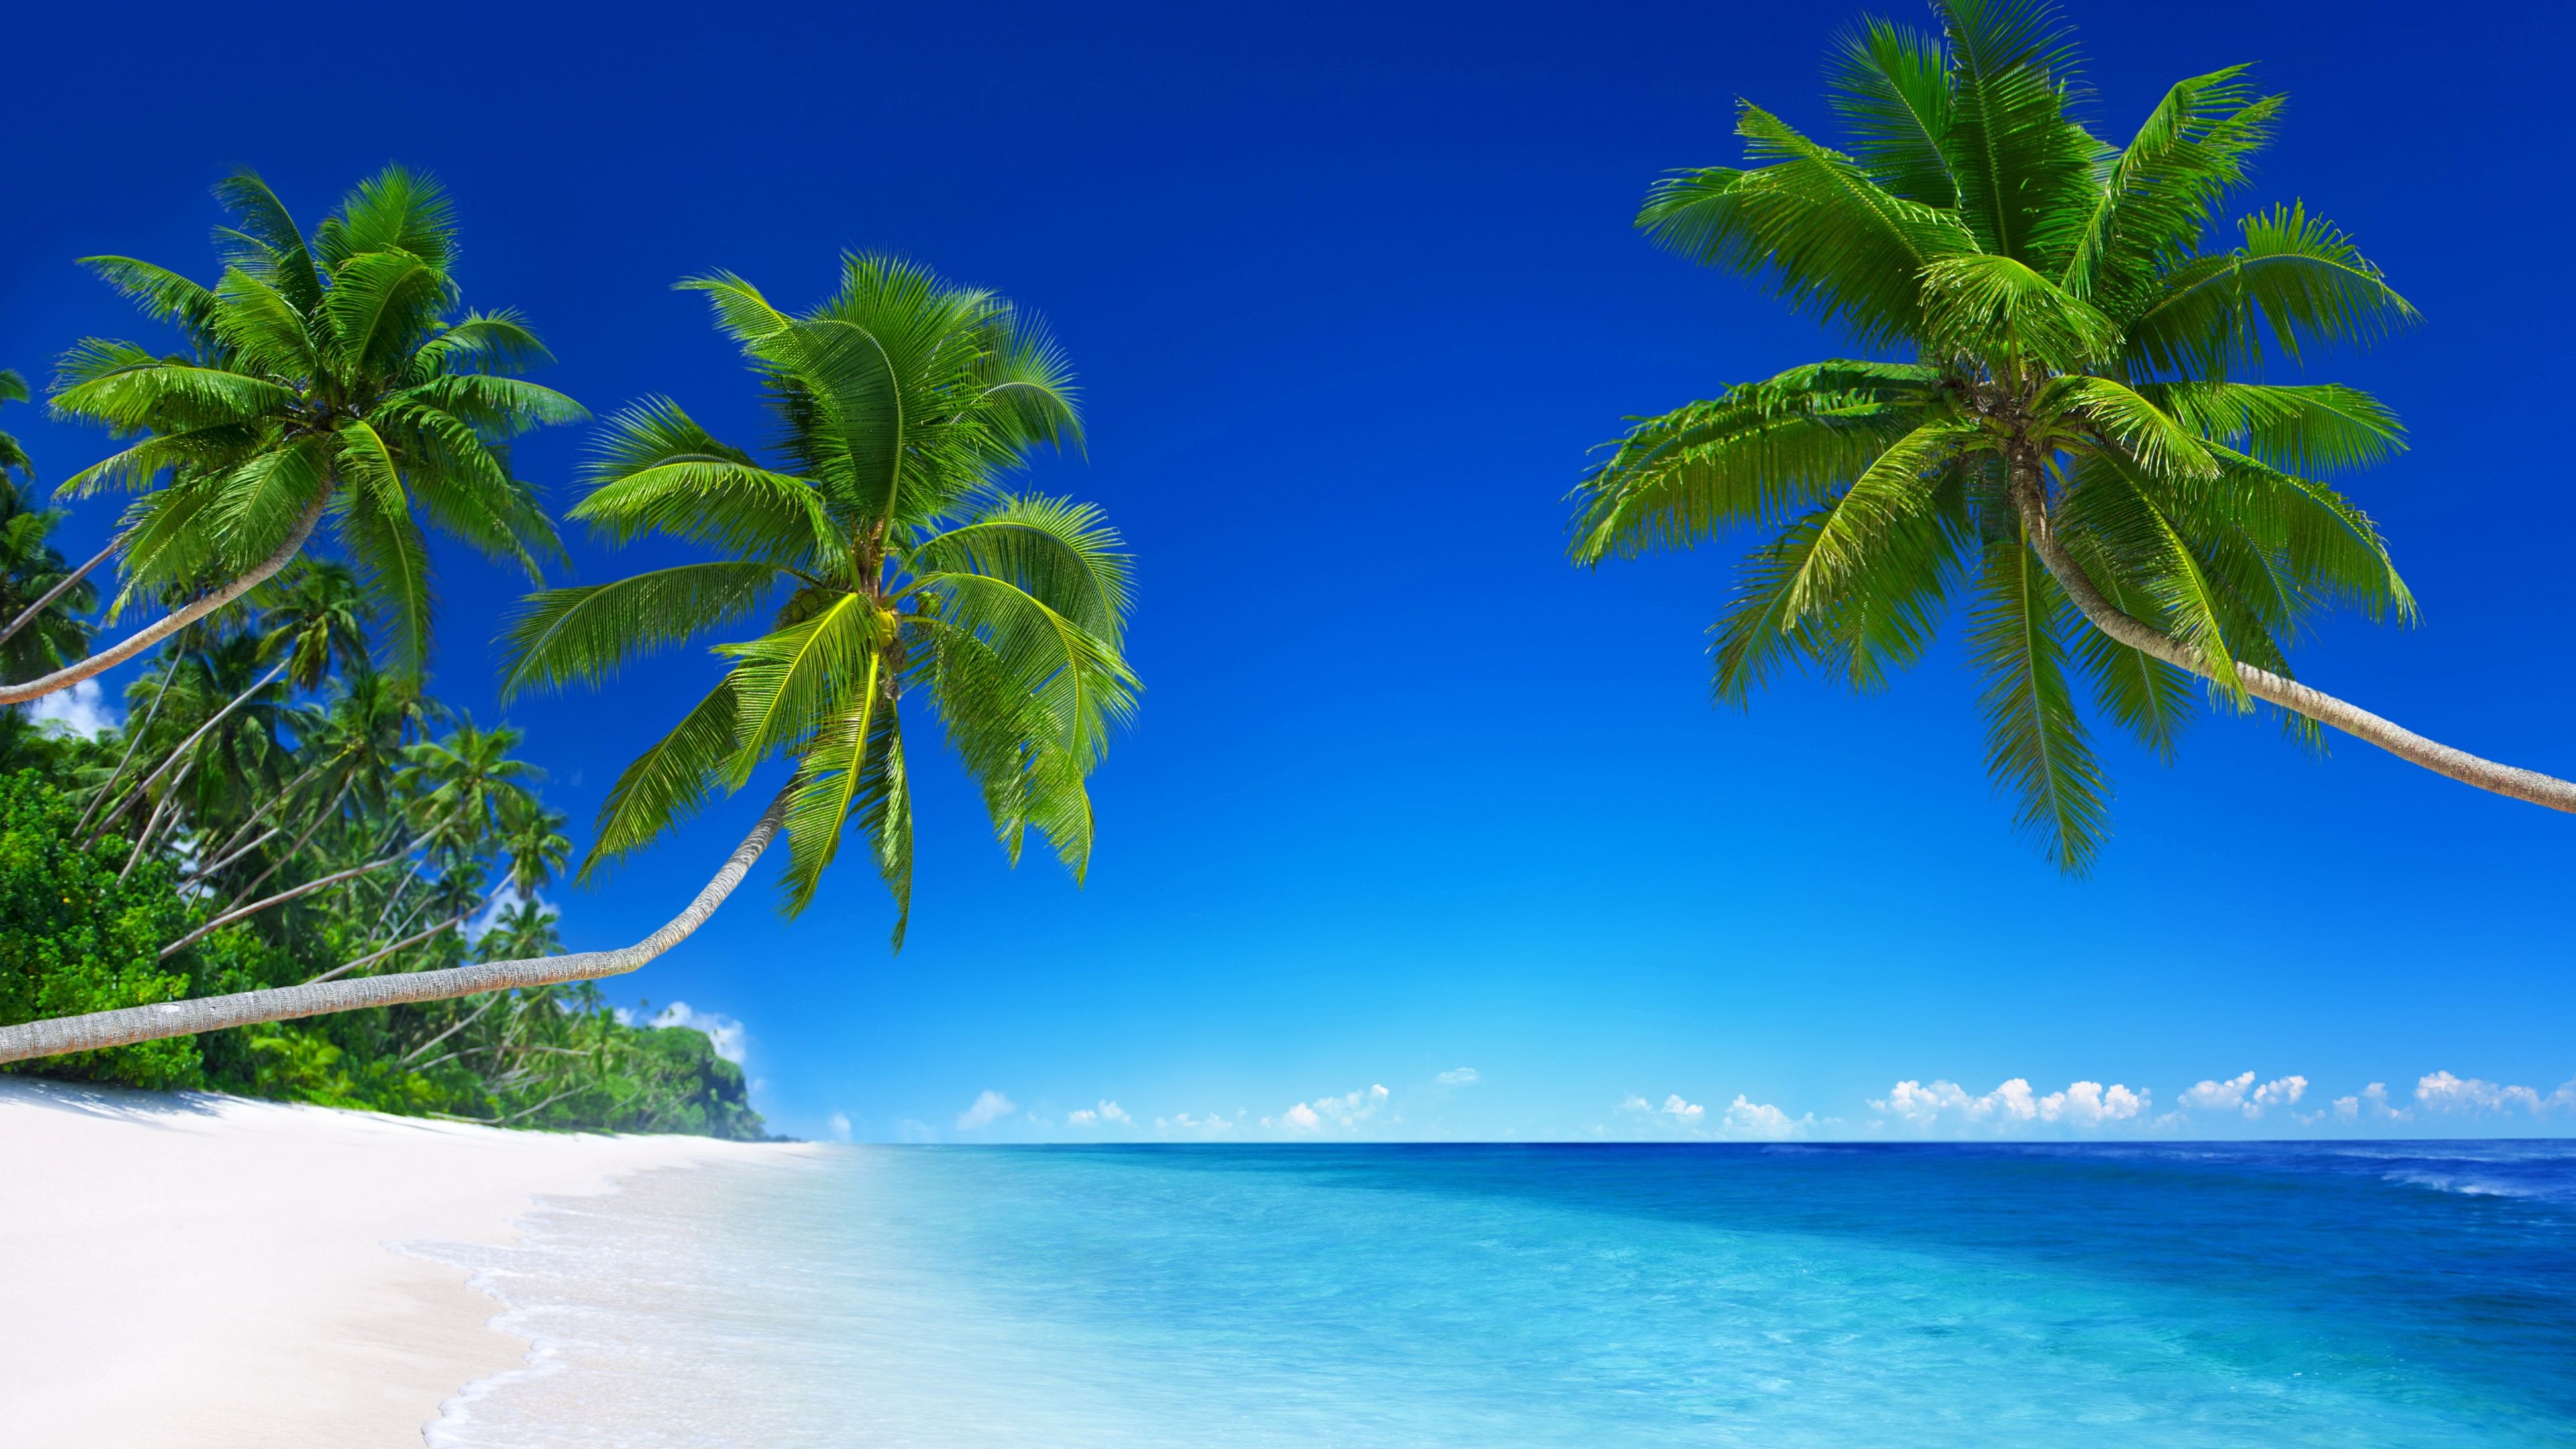 Tropical Beach Paradise 5K Wallpaper in jpg format for free download